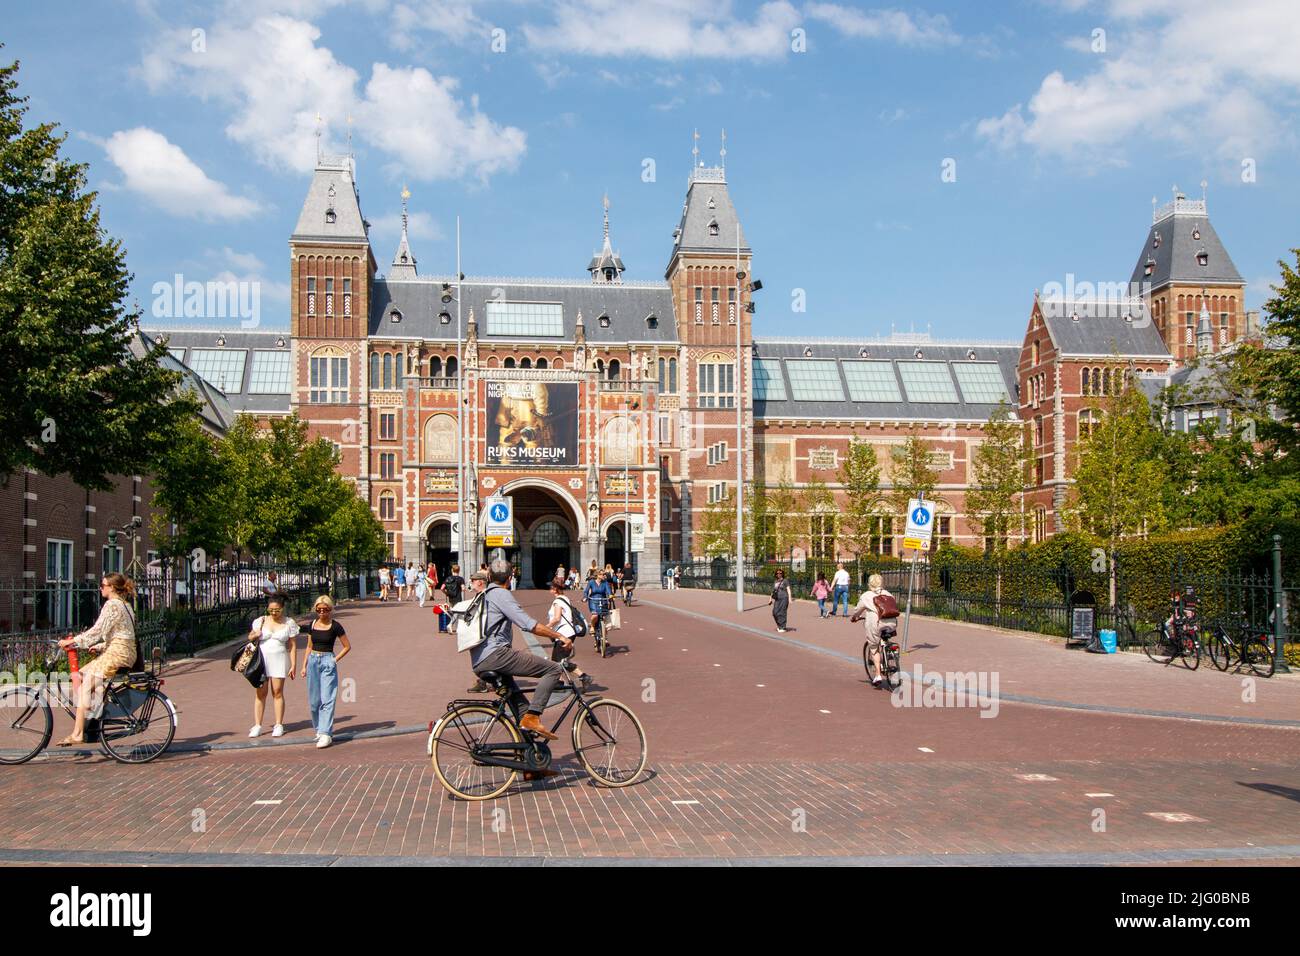 The exterior of the Rijksmuseum, Amsterdam. Stock Photo